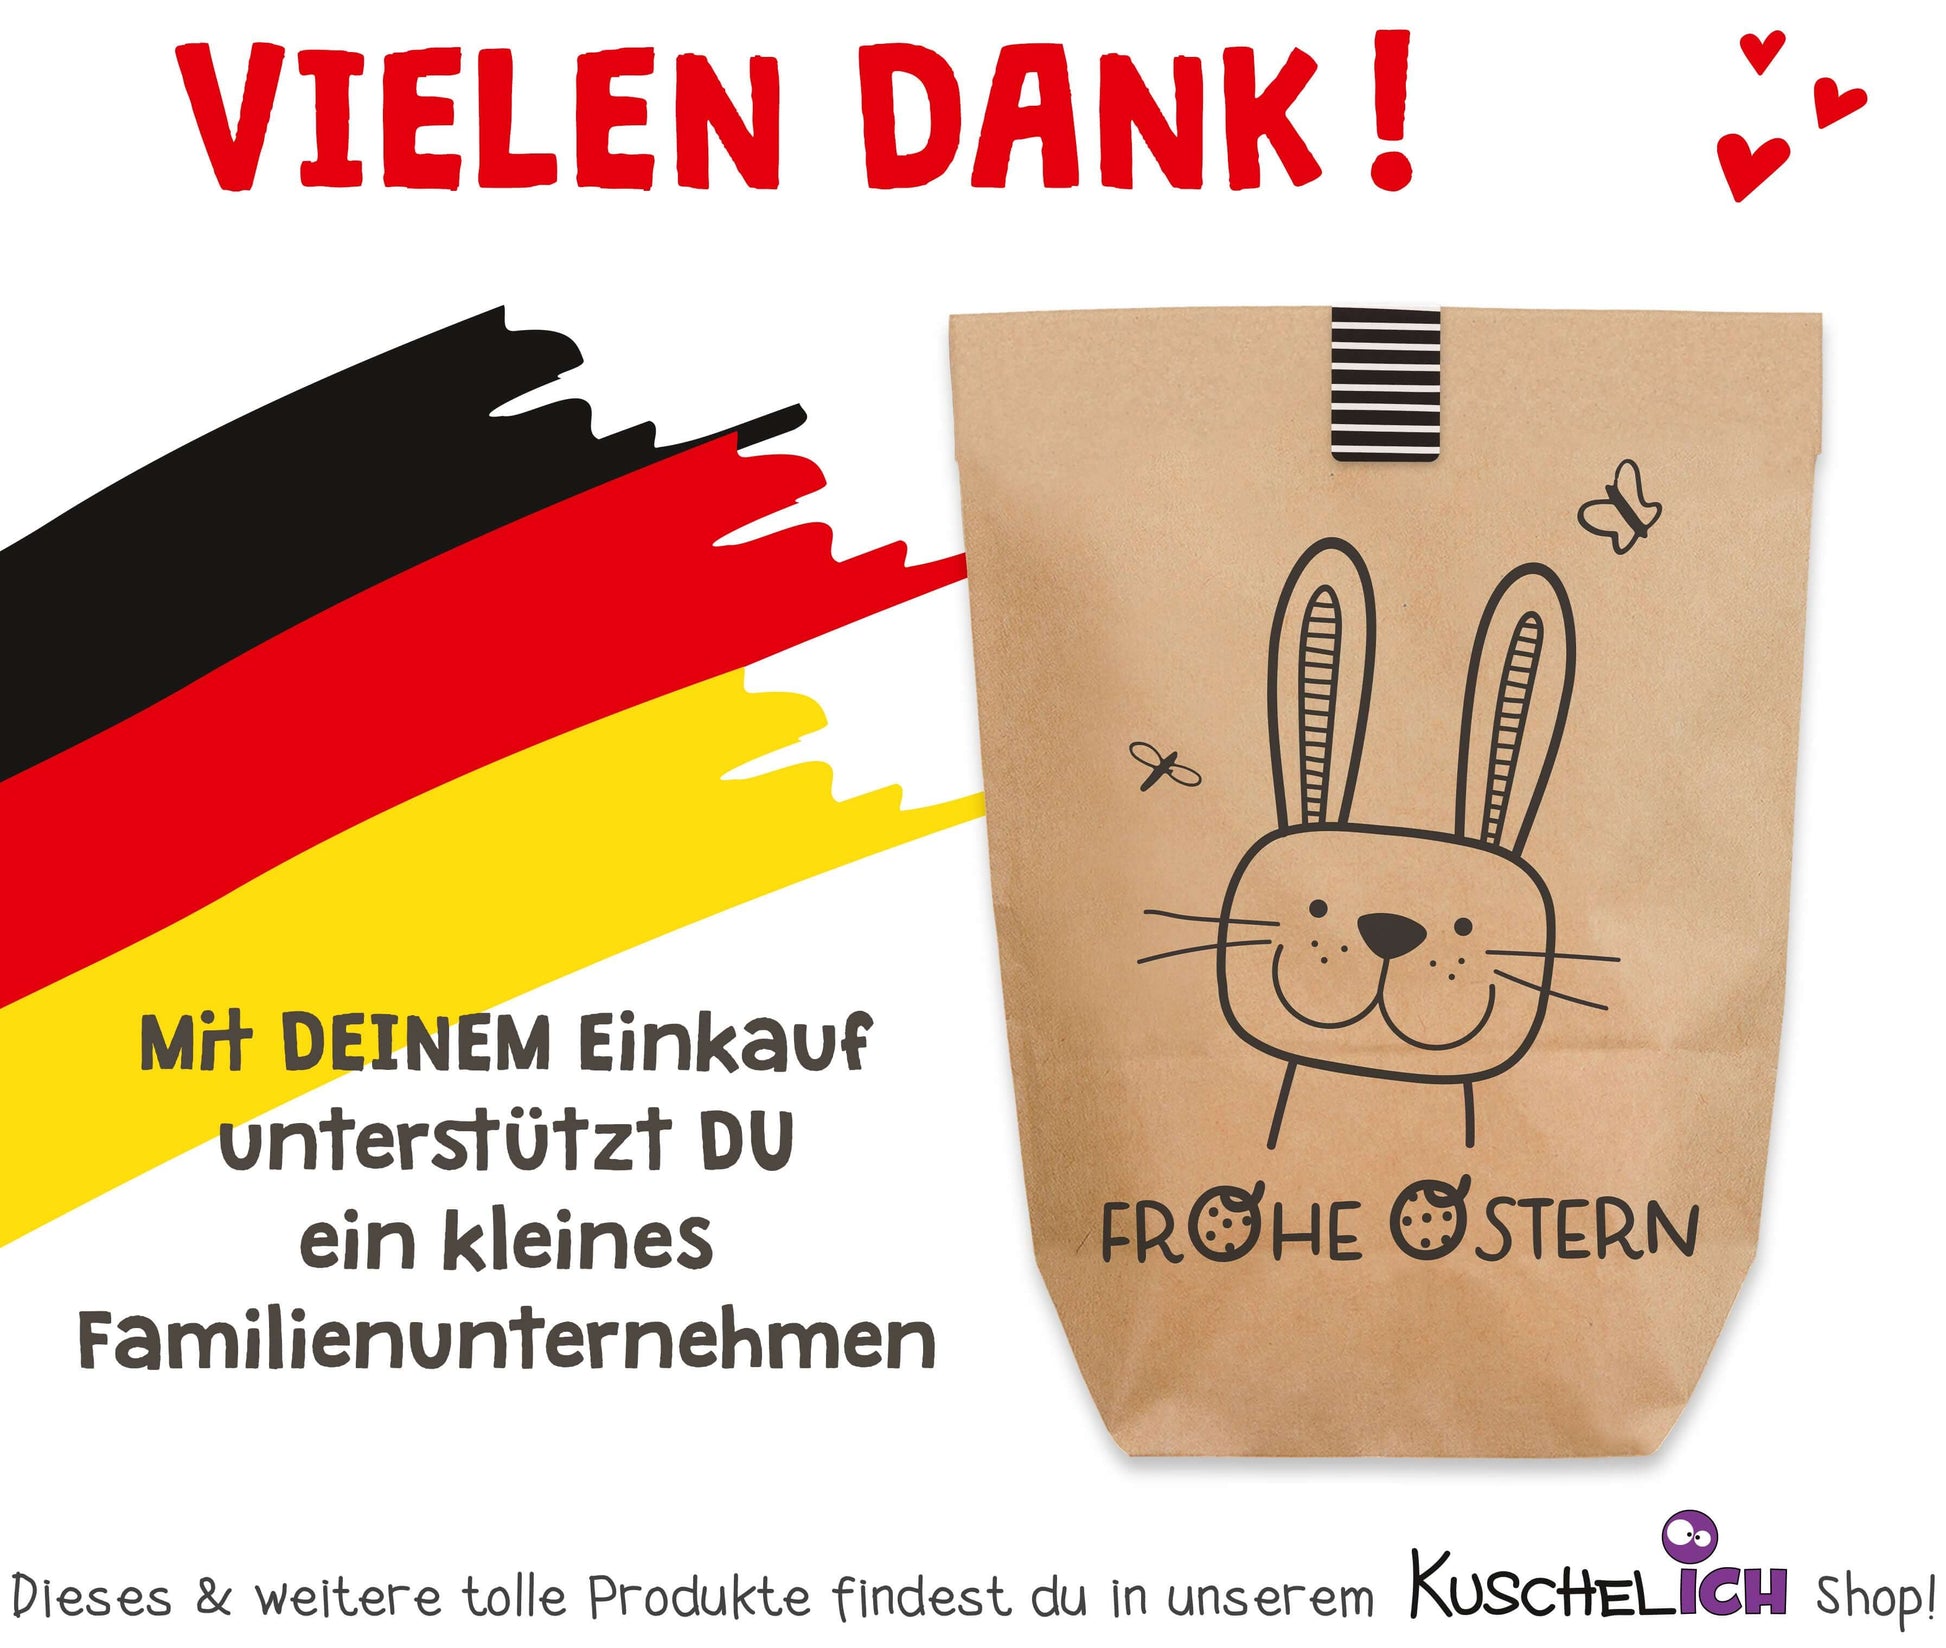 Ostertüte "Frohe Ostern" Kraftpapier KuschelICH Made in Germany